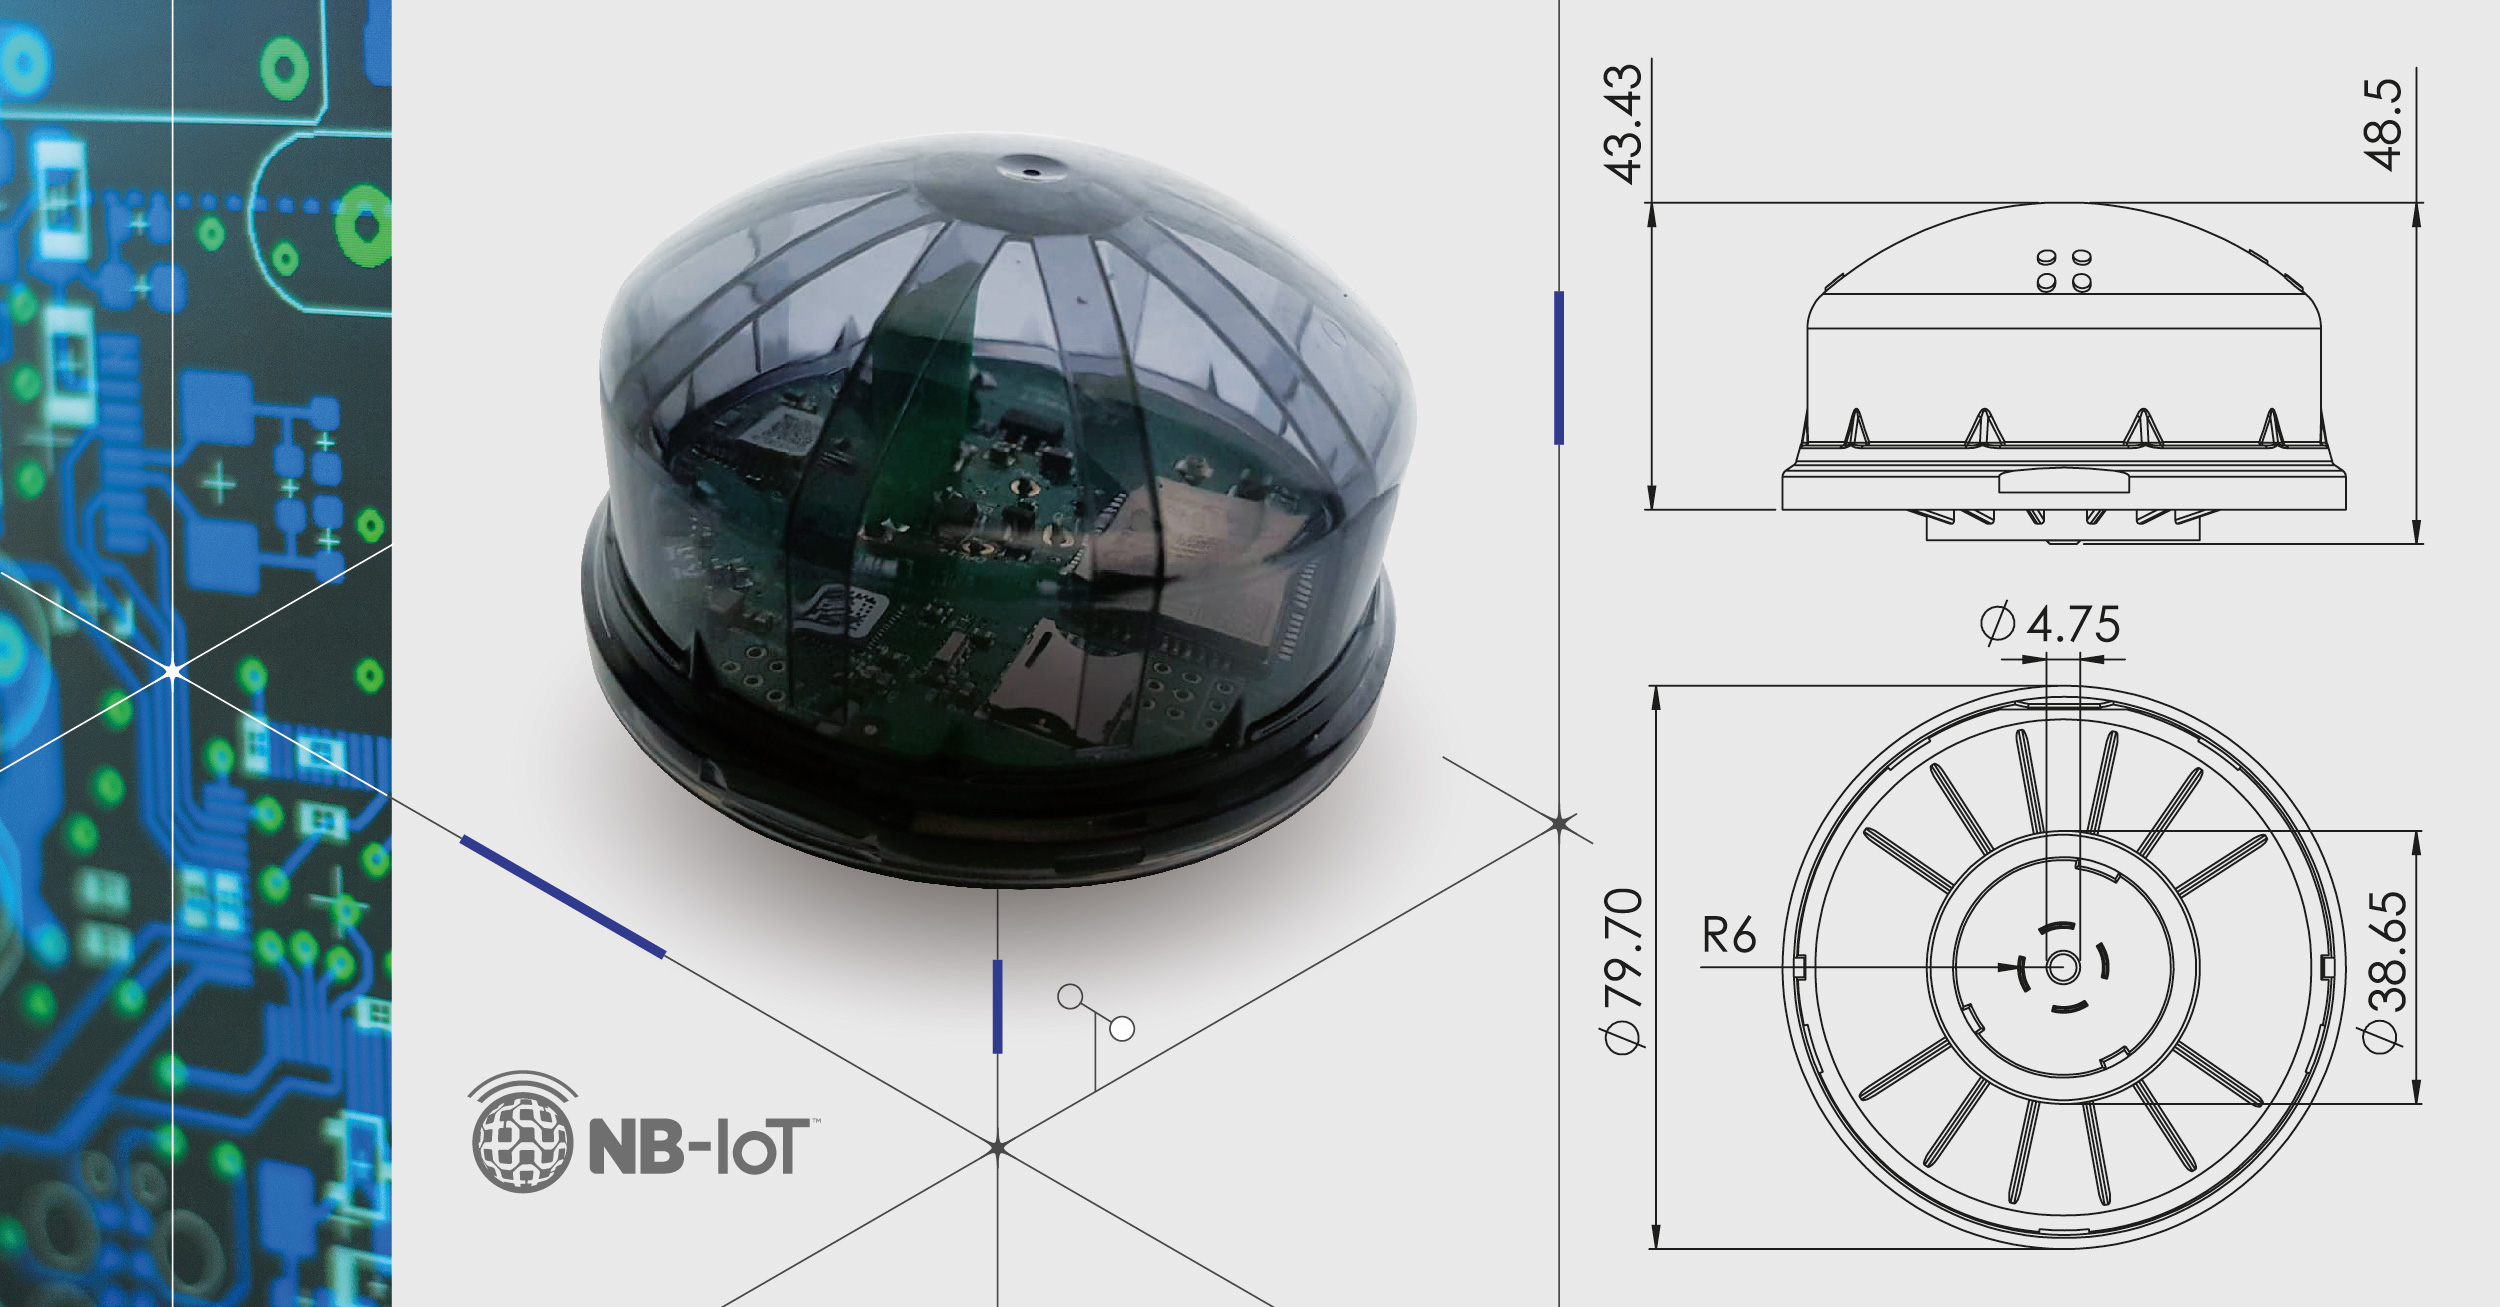 New NB-IoT compatibility for the smallest inteliLIGHT ZHAGA streetlight controller so far